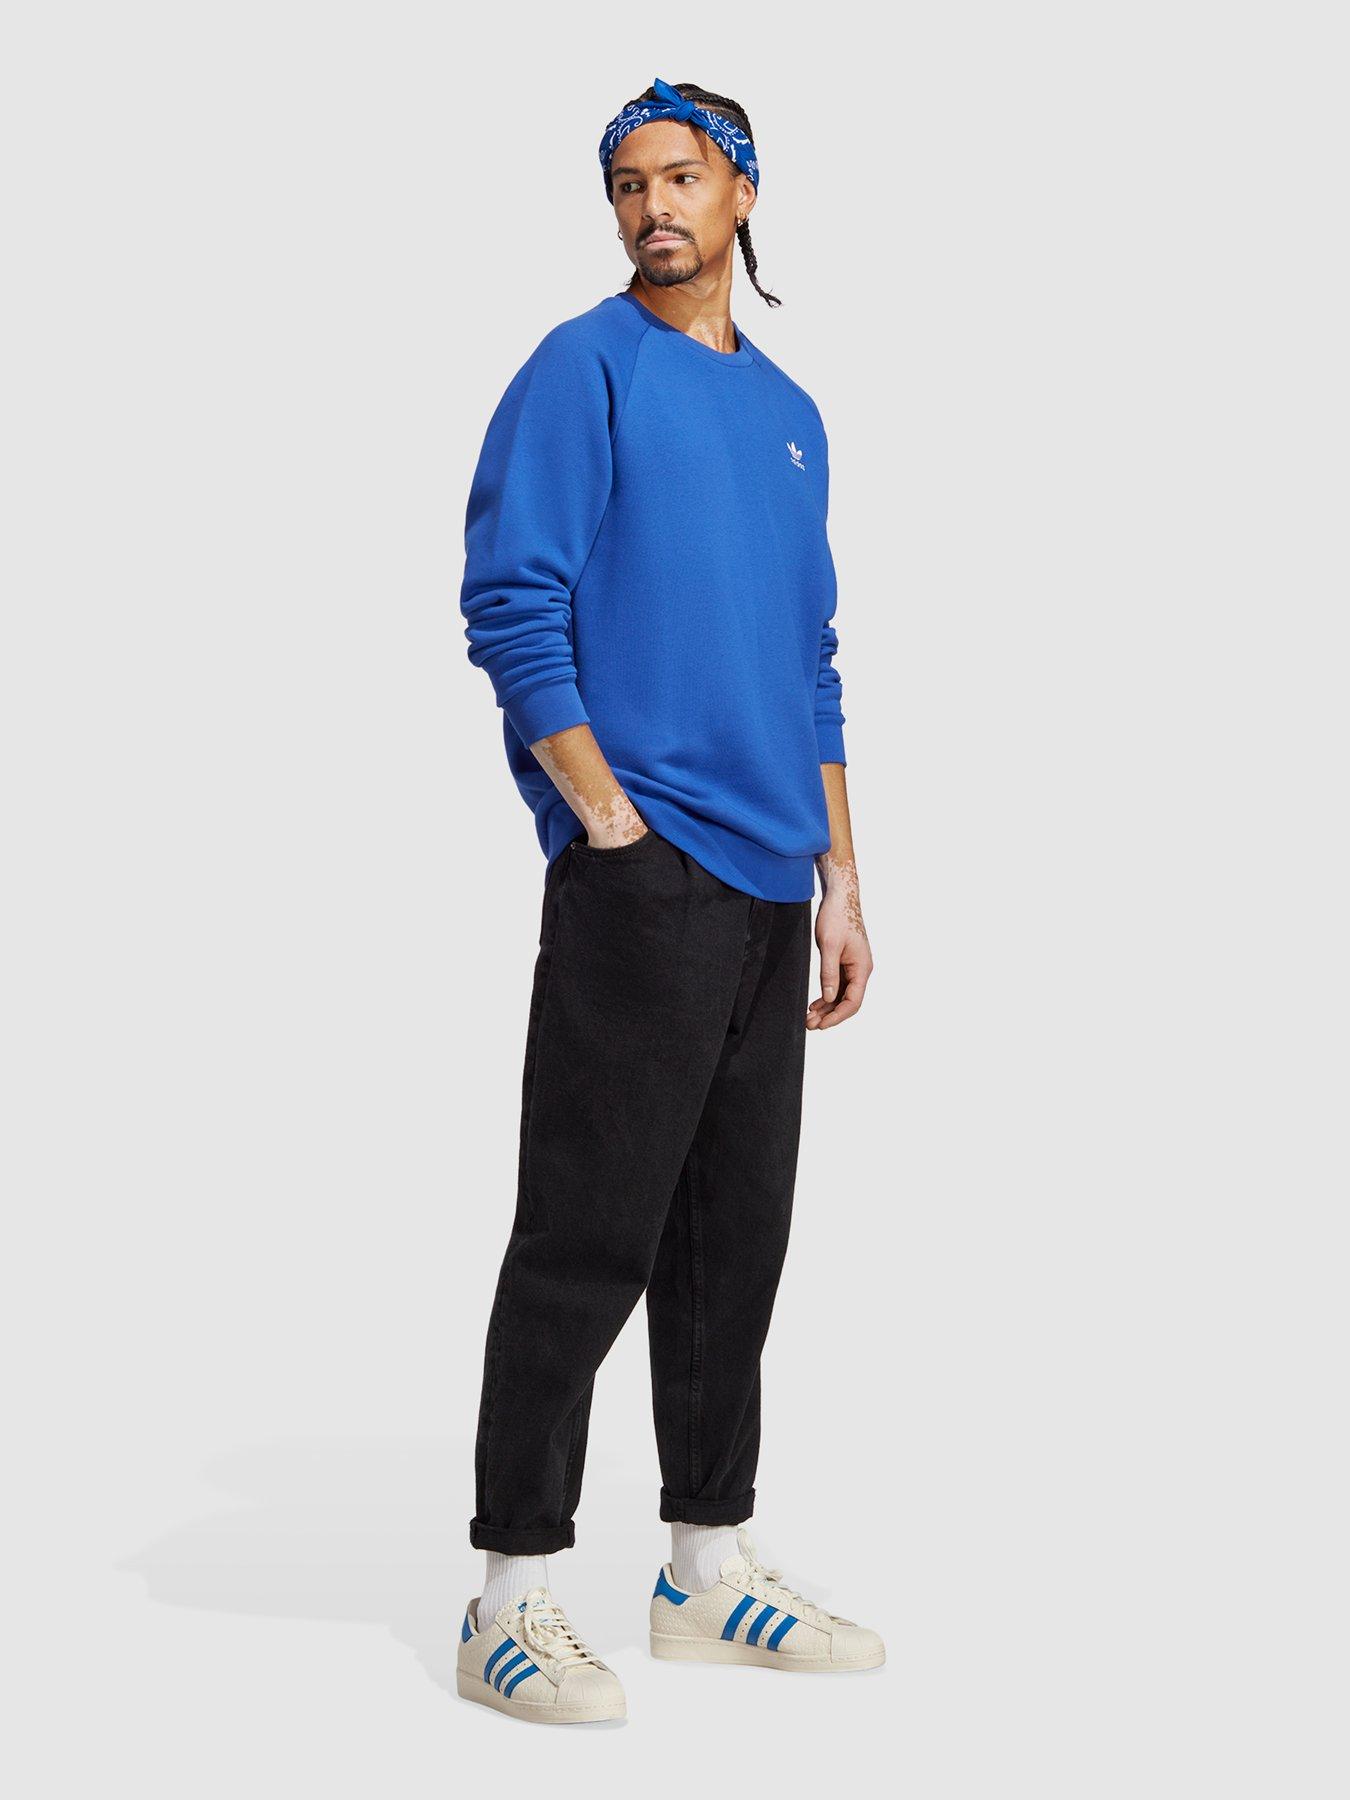 adidas Originals Trefoil Essentials Crewneck Sweatshirt - Blue |